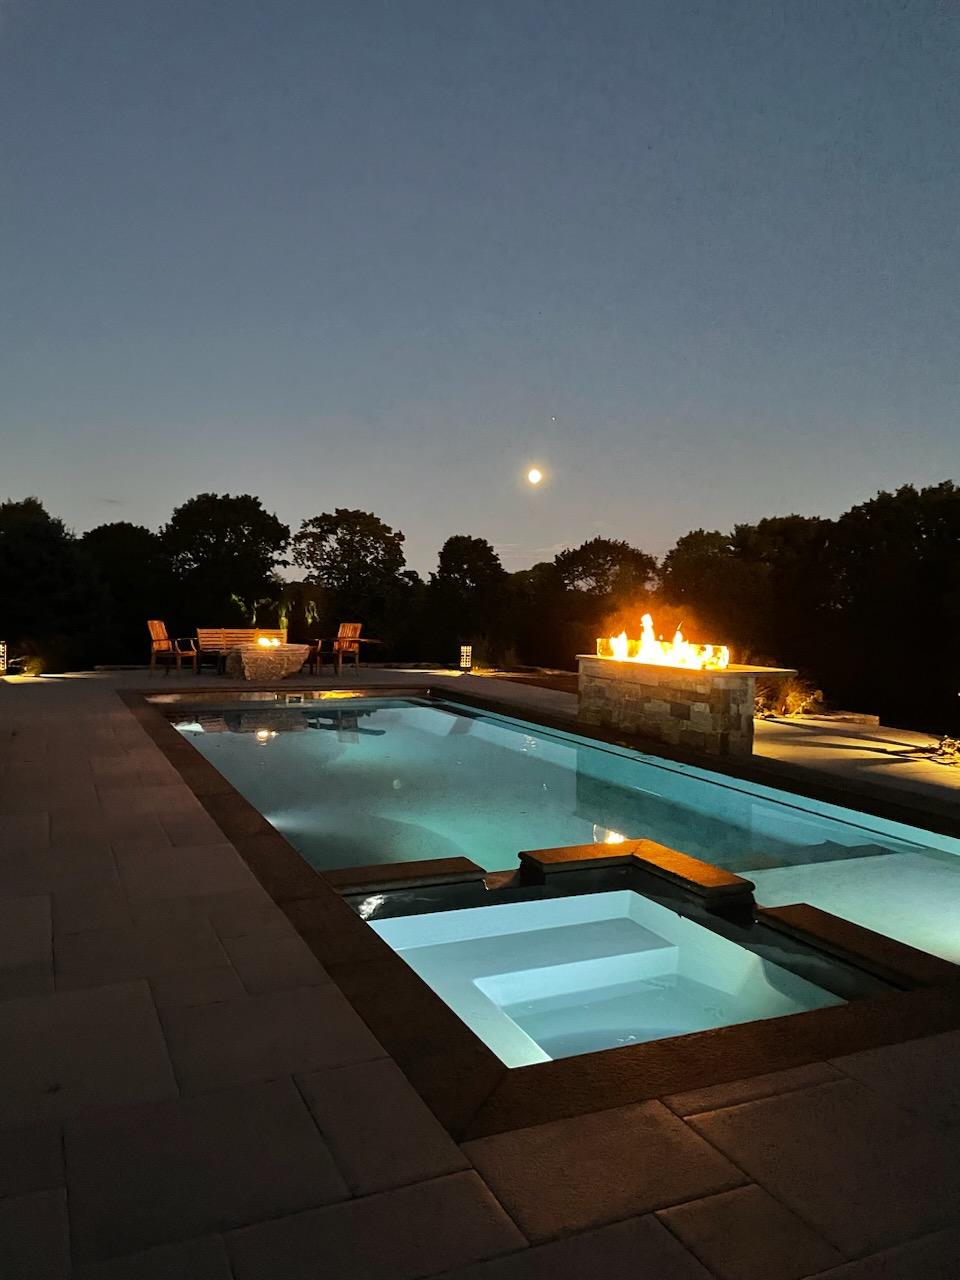 A fiberglass inground swimming pool with night illumination